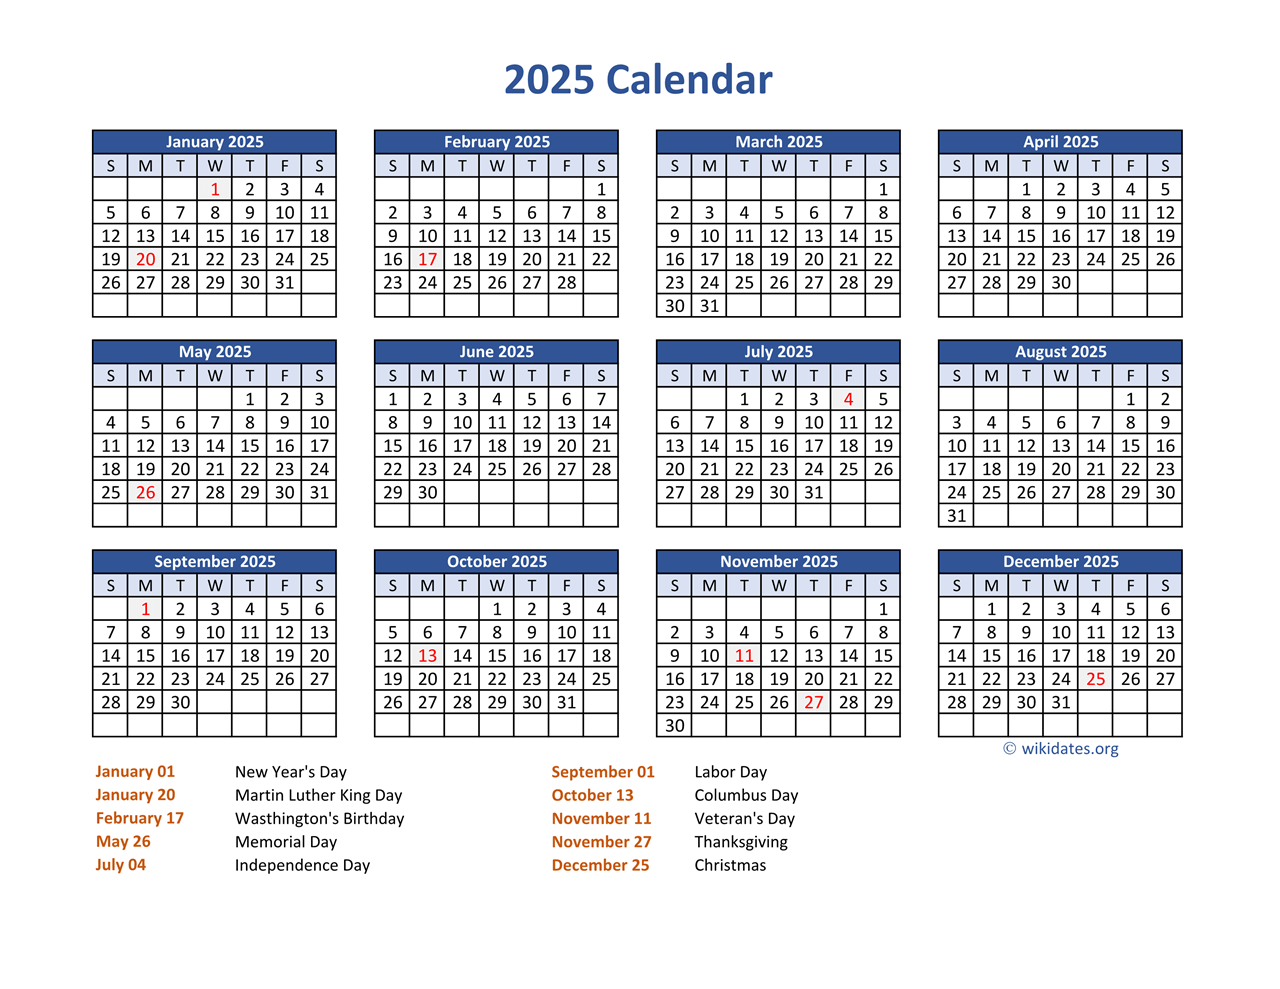 PDF Calendar 2025 with Federal Holidays | WikiDates.org